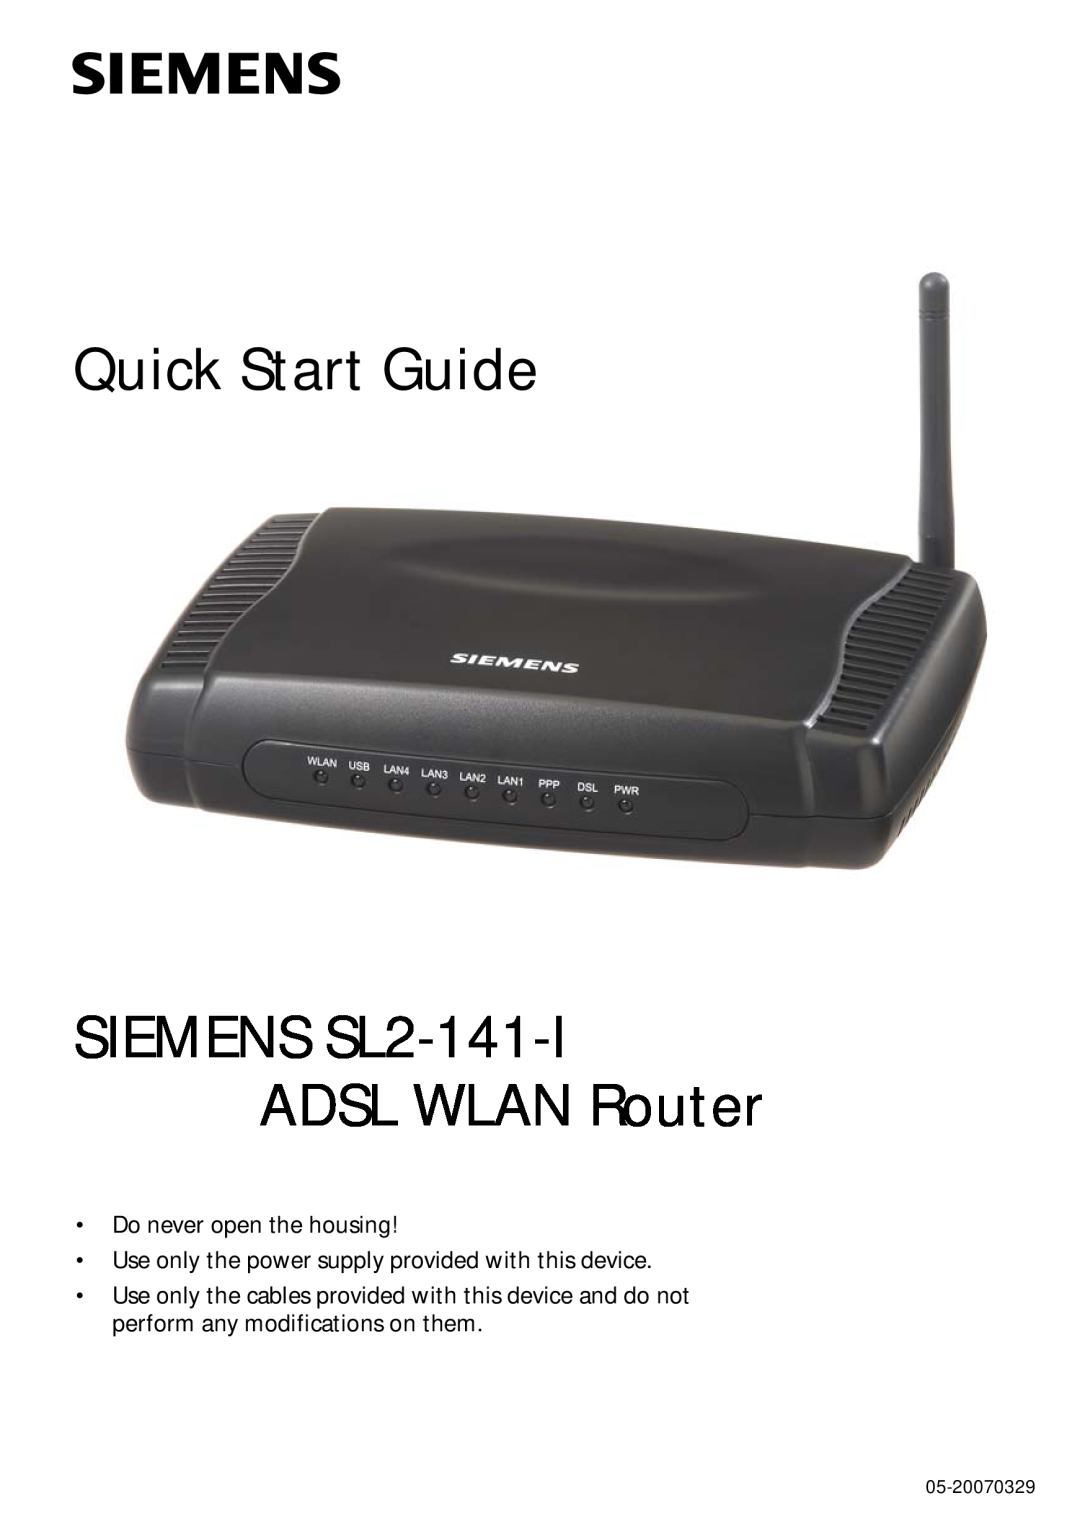 Siemens quick start Quick Start Guide SIEMENS SL2-141-I ADSL WLAN Router, 05-20070329 